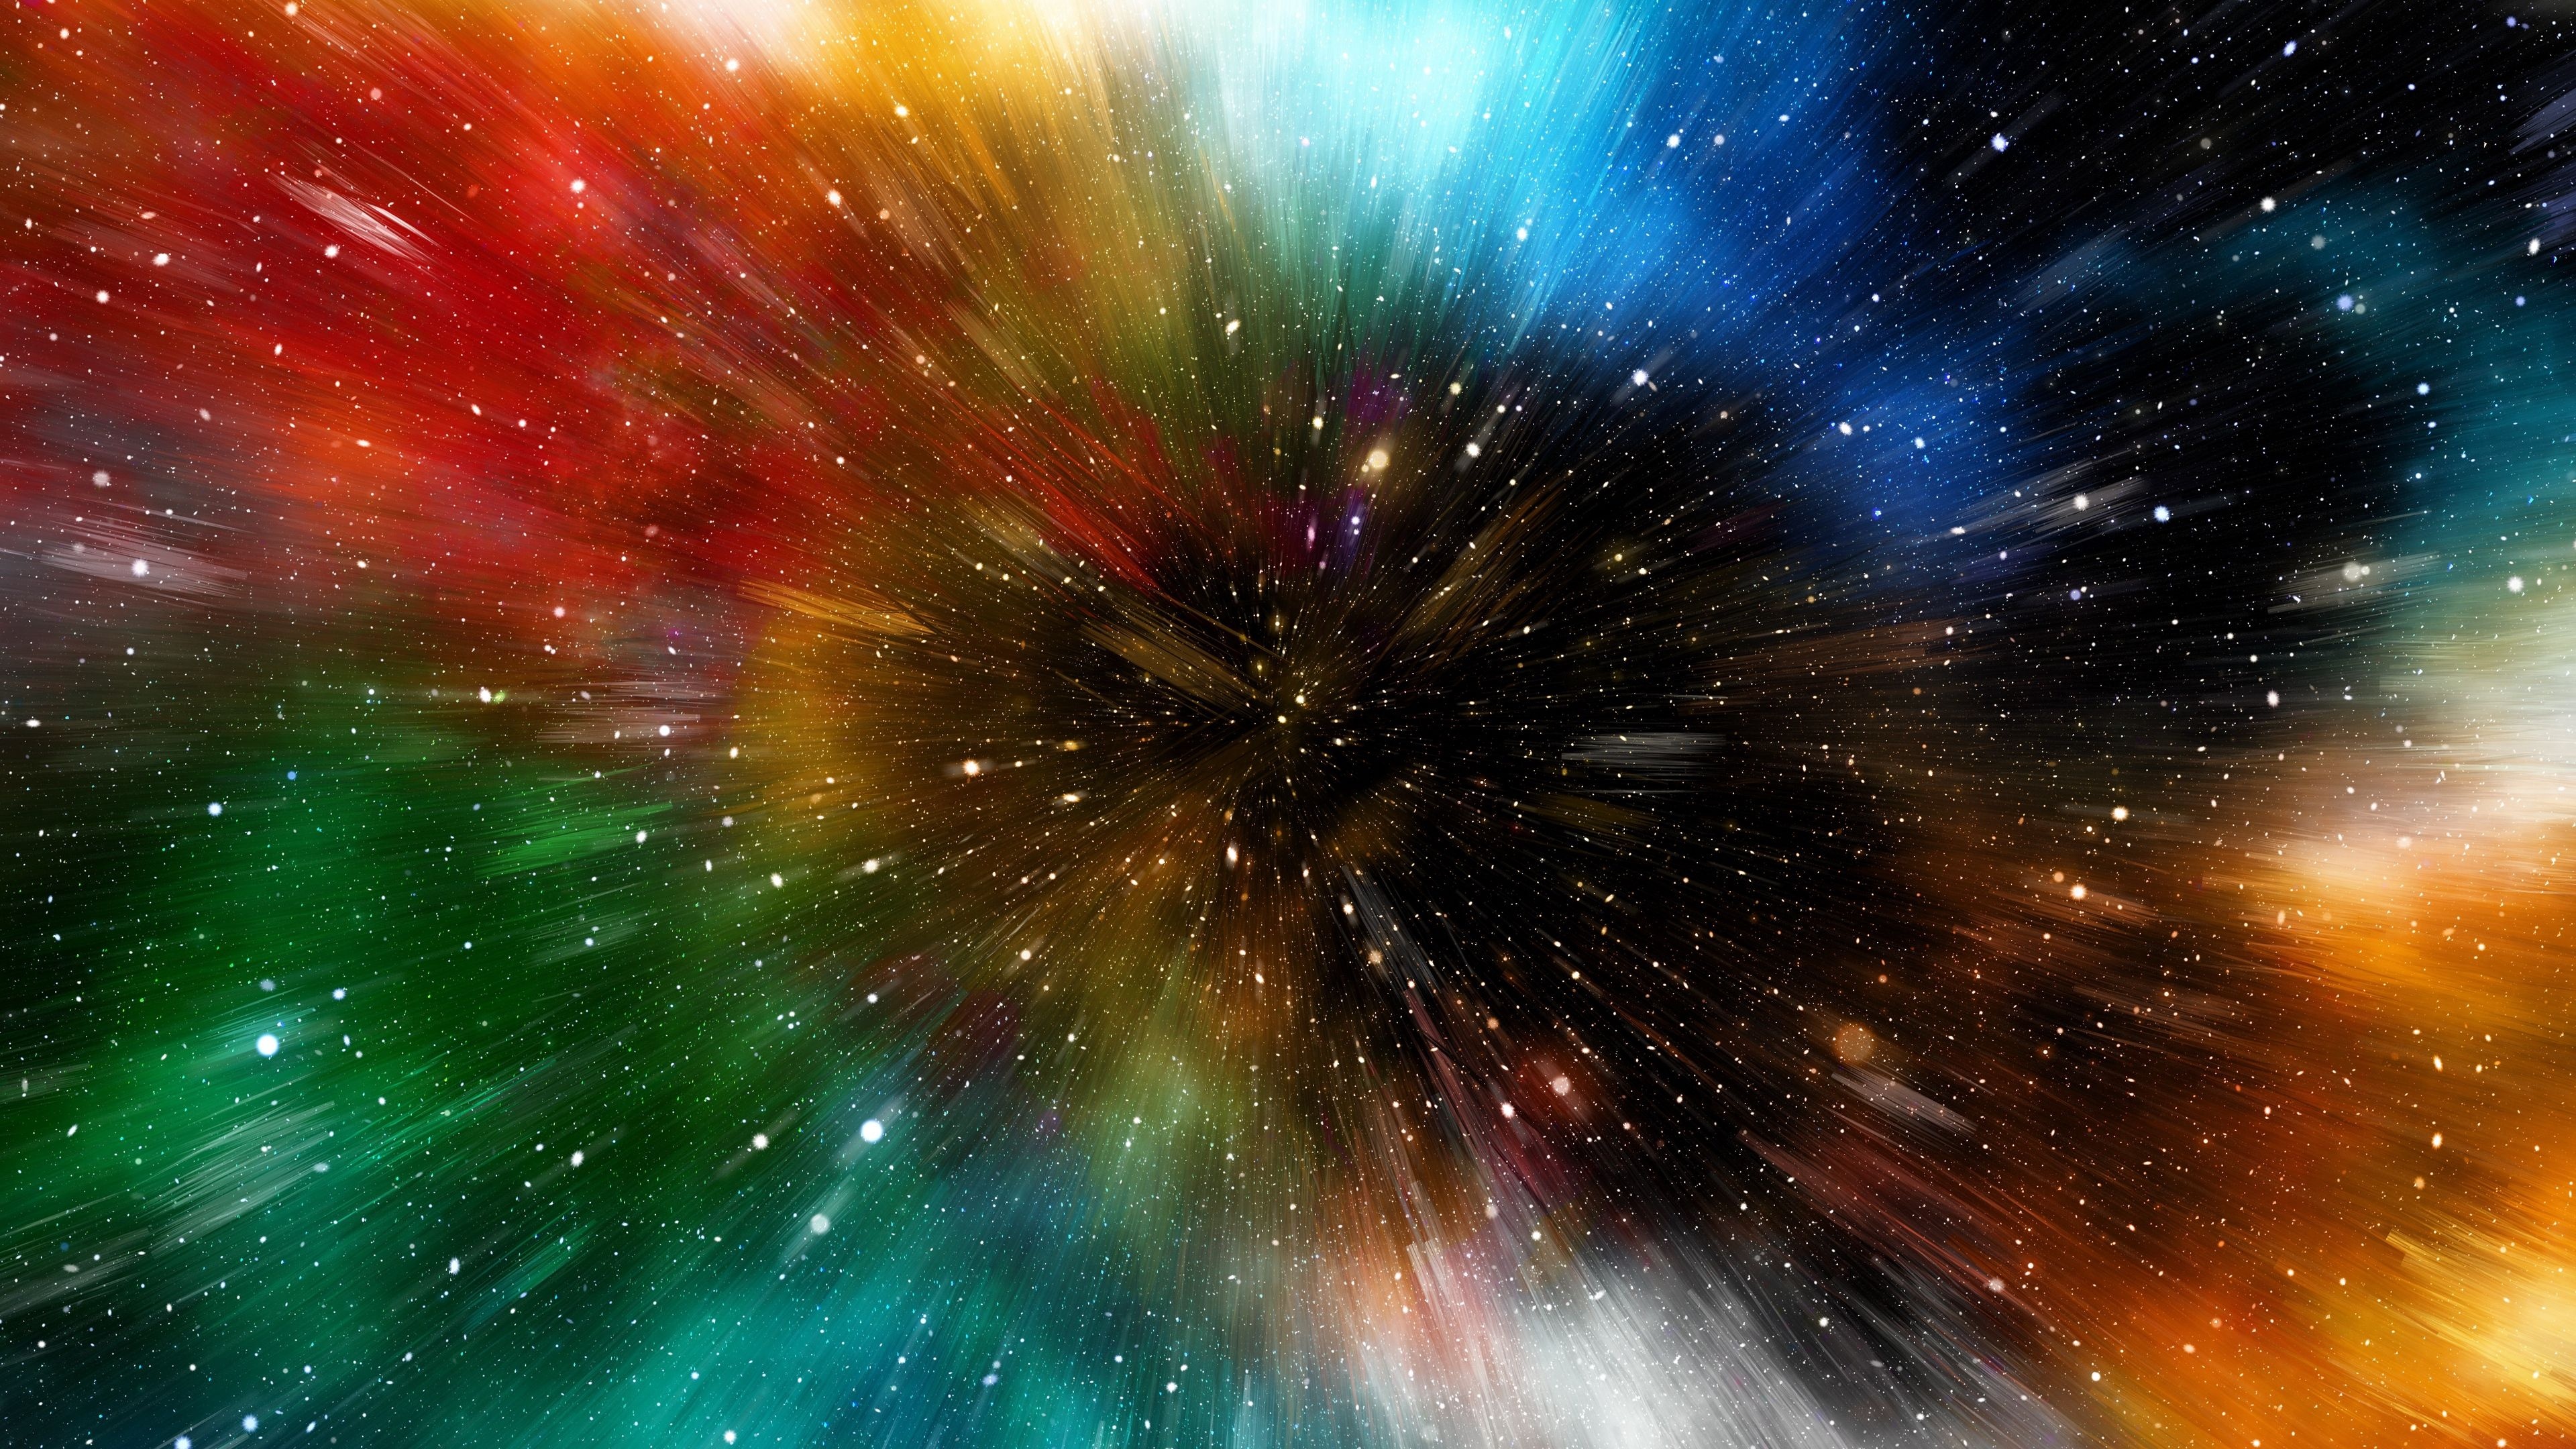 Universe wallpaper, Multicolored immersion, Cosmic visuals, Surreal landscapes, 3840x2160 4K Desktop